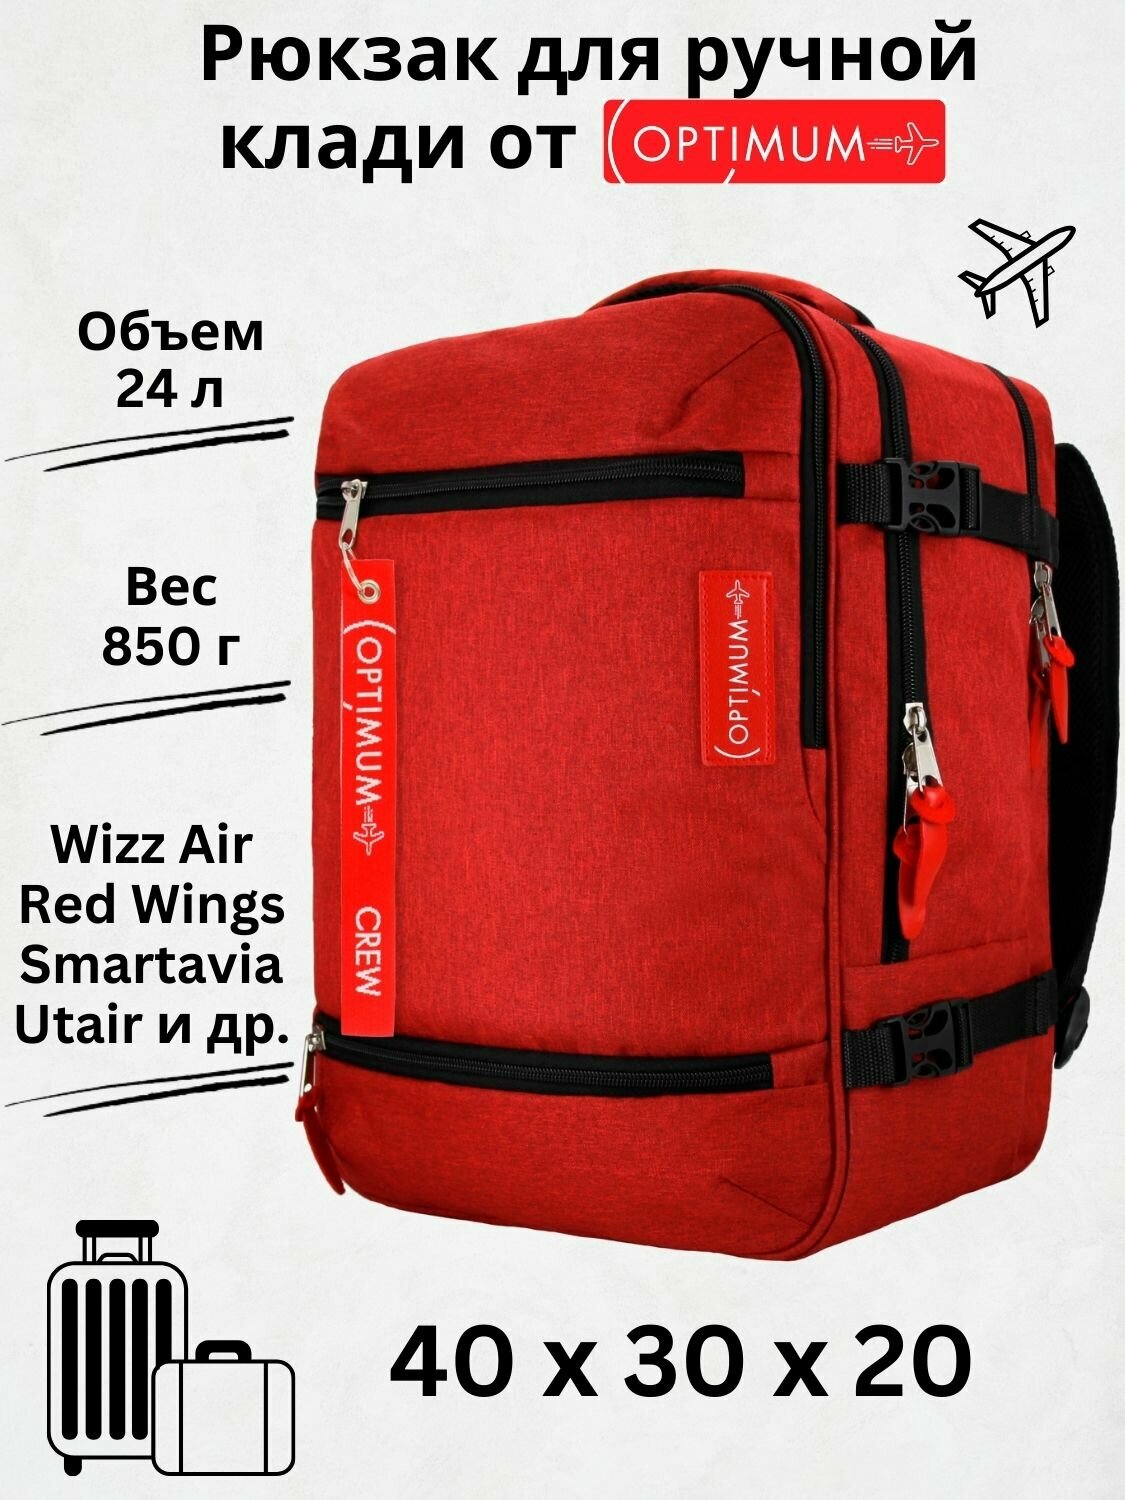 Рюкзак для путешествий дорожный ручная кладь 40х30х20 Смартавиа ЮТэйр Wizz Air, красный